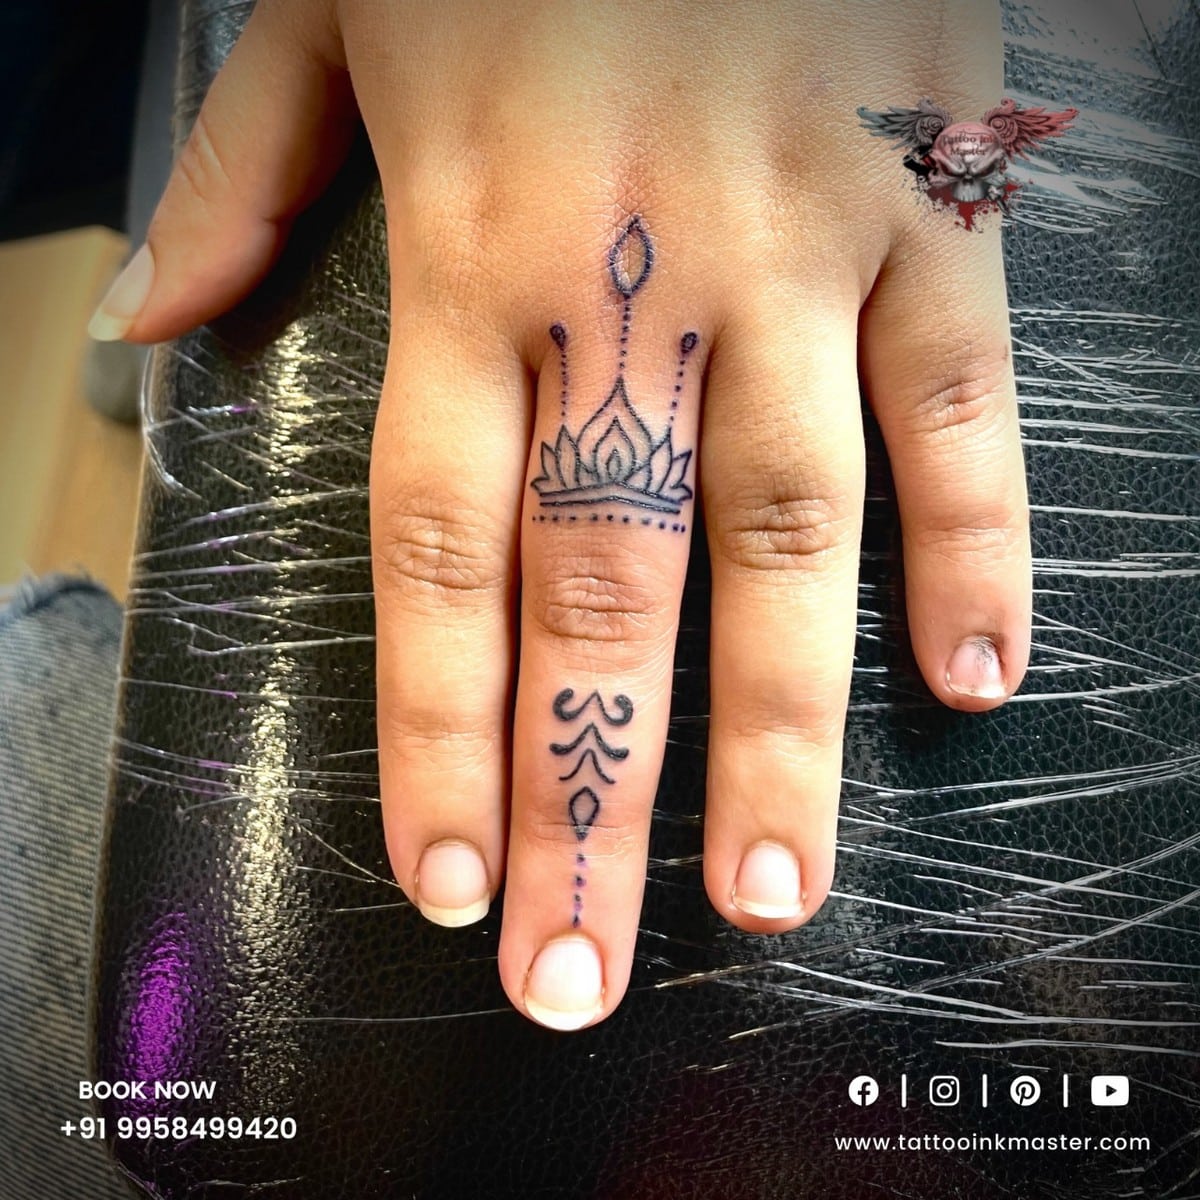 Small and Designer Tattoo | Tattoo Ink Master